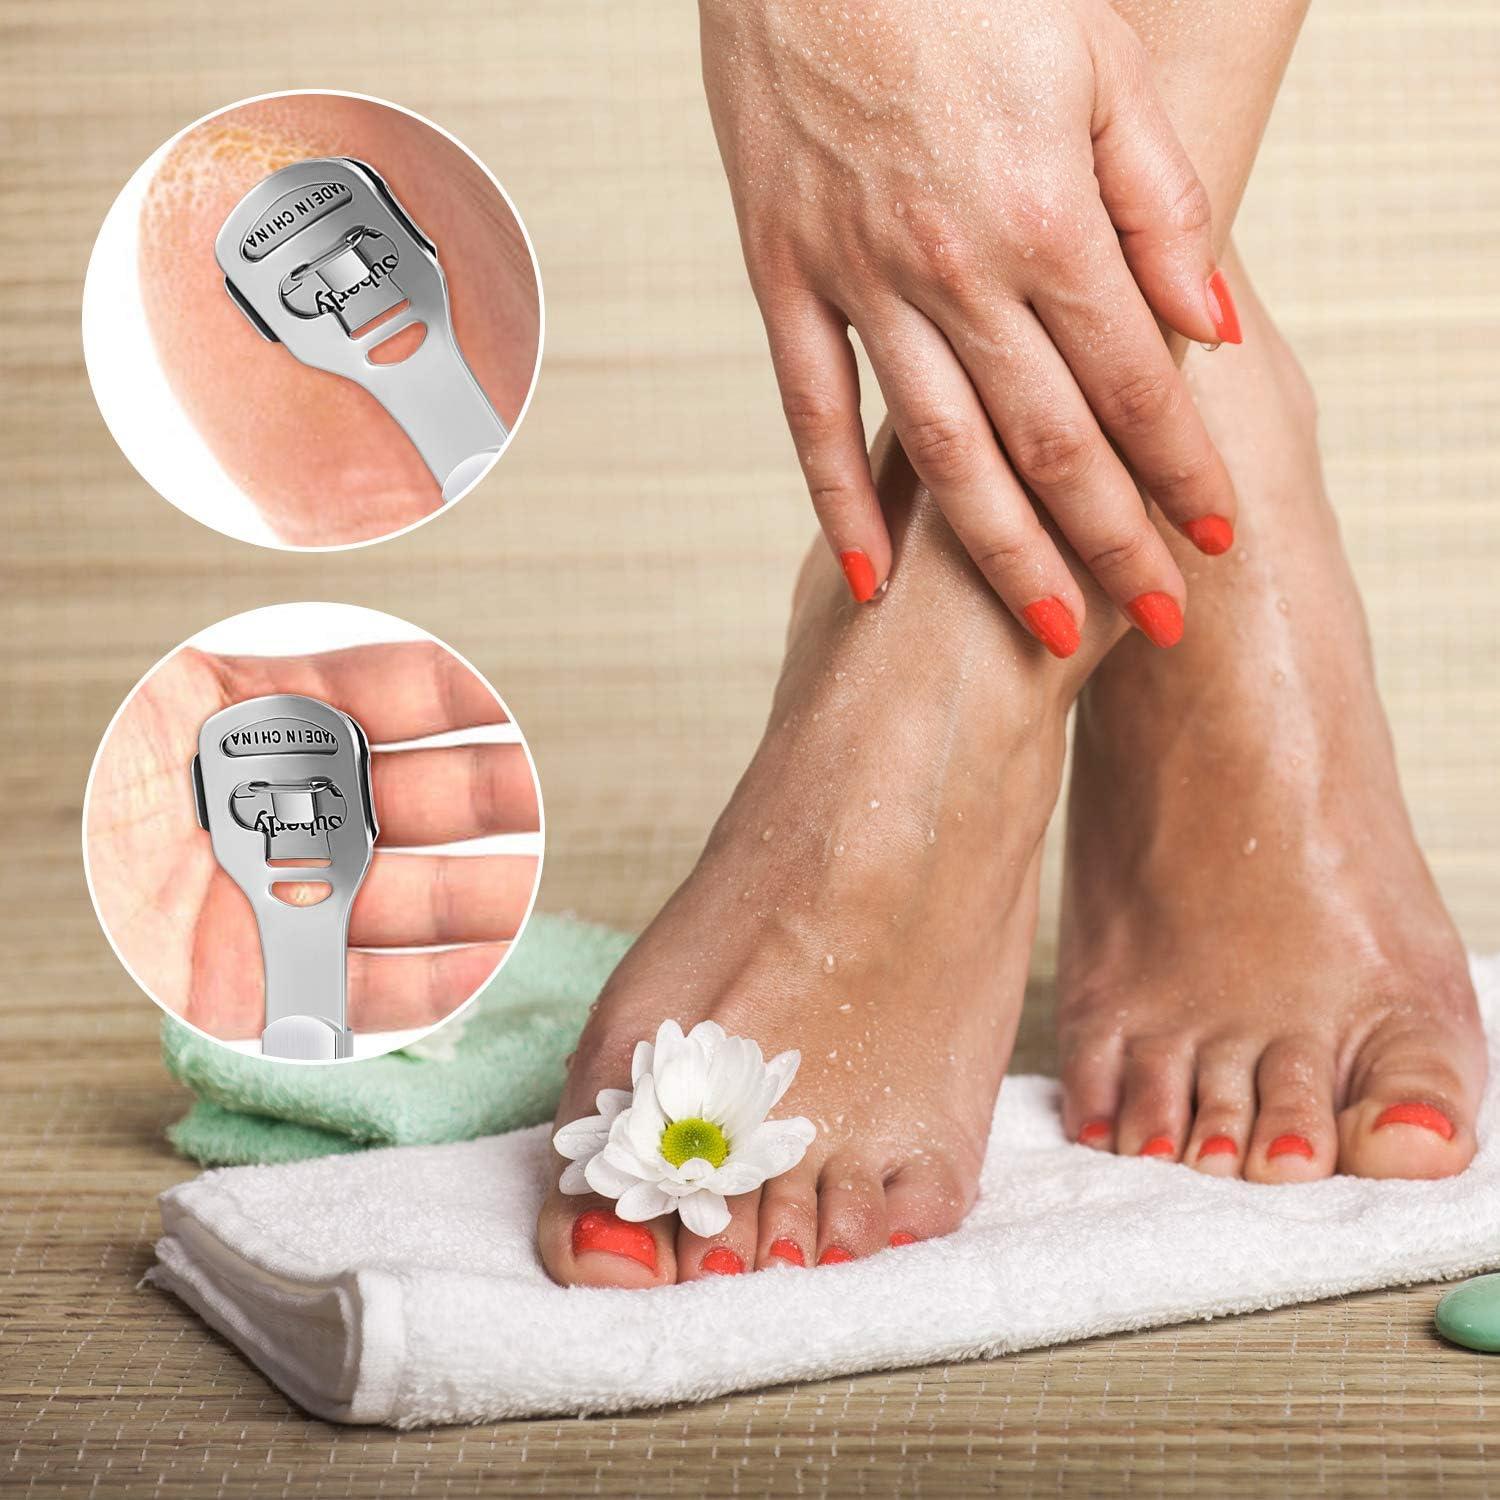 Foot Care Pedicure Callus Shaver, To Removing Hard Skin And Callus